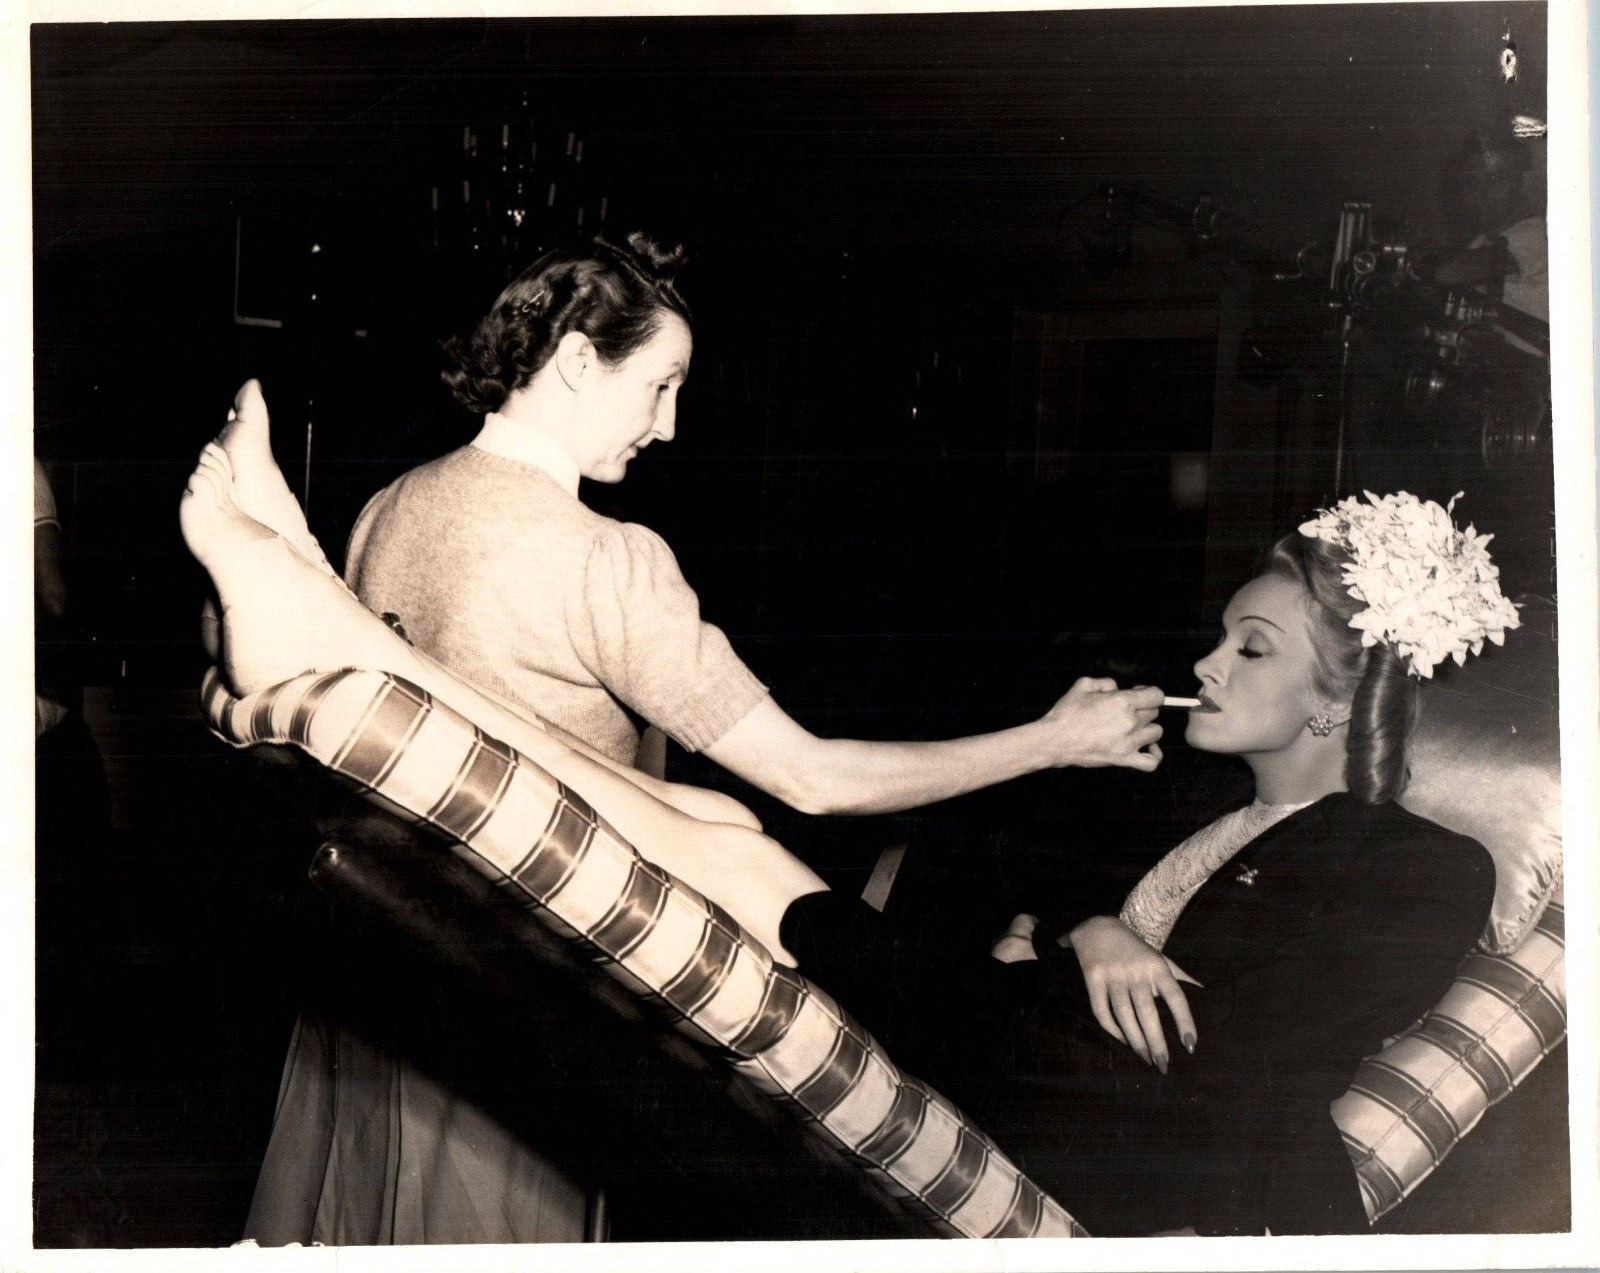 HOLLYWOOD BEAUTY MARLENE DIETRICH by LIPPMAN STUNNING PORTRAIT 1942 Photo C35